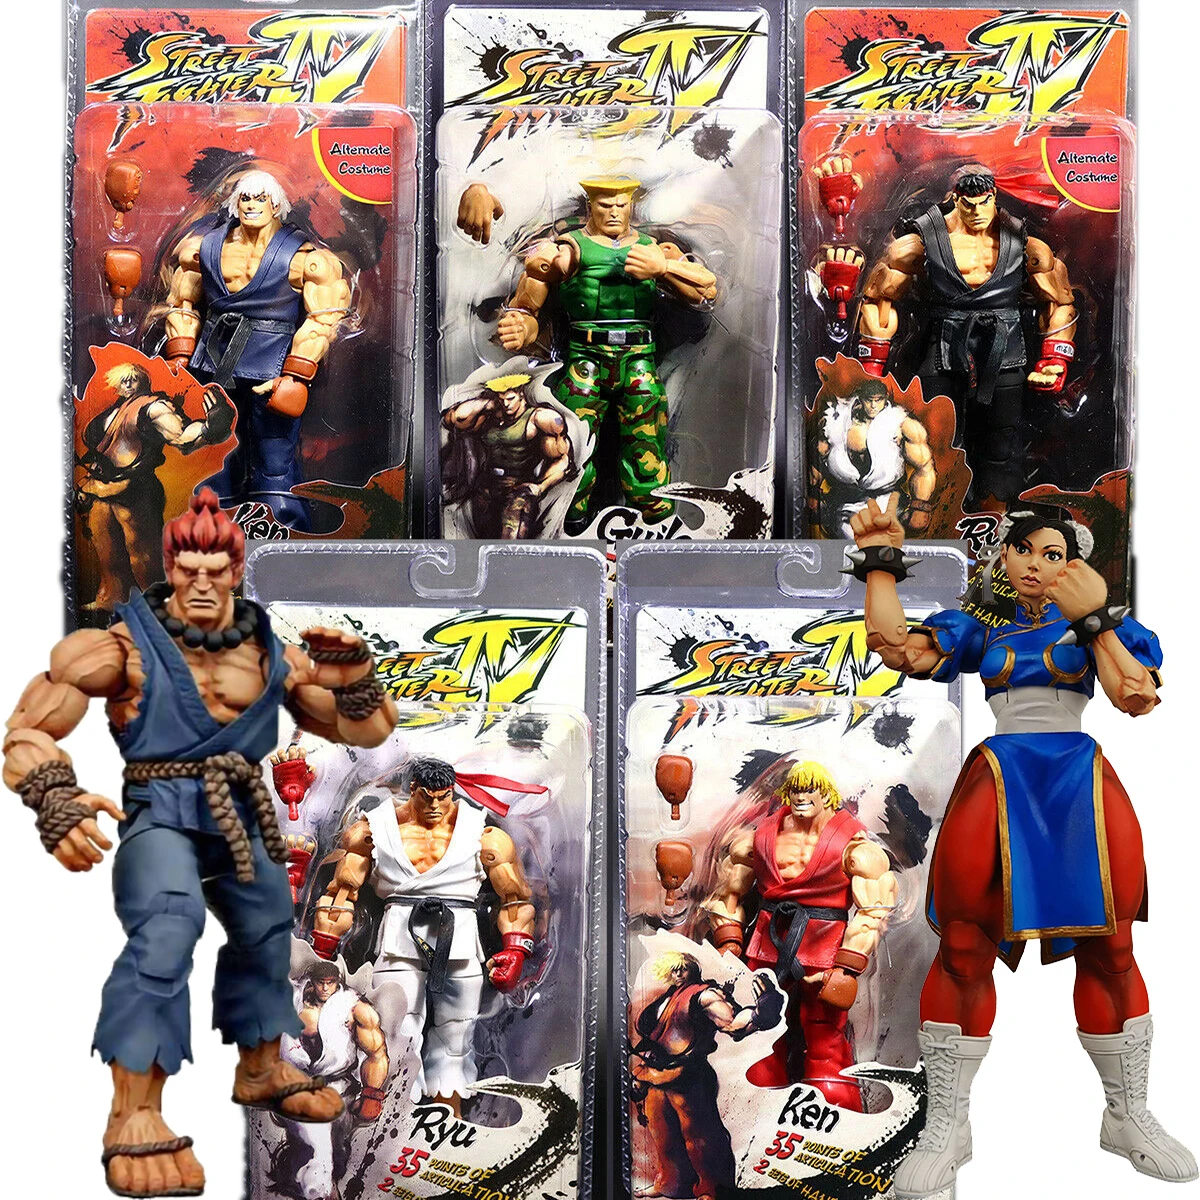 Neca: Street Fighter 4 Series 2 – YBMW